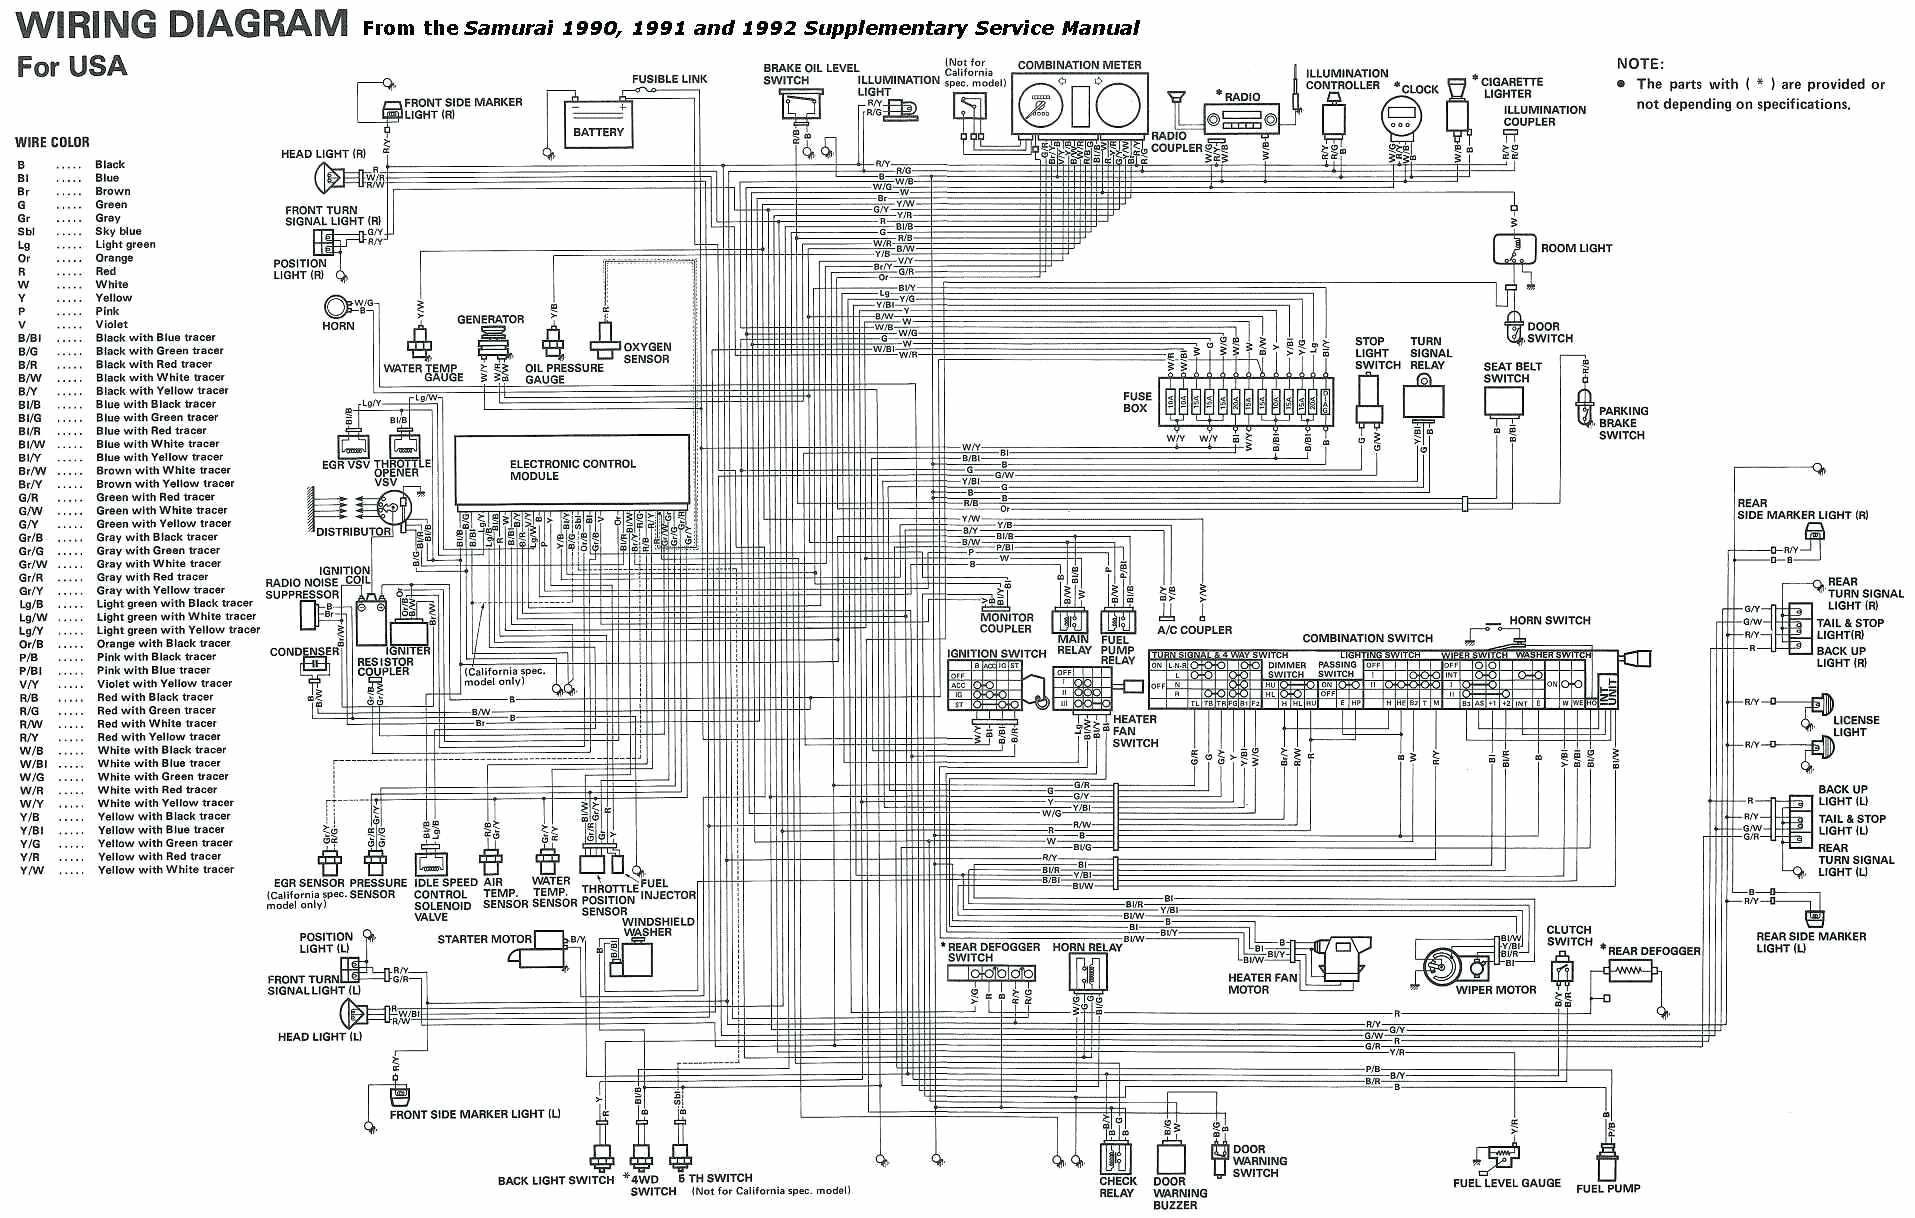 Daihatsu Fujitsu Ten Car Audio Wiring Diagram Daihatsu Mira Wiring Diagram Car Manuals Diagrams Fault Of Daihatsu Fujitsu Ten Car Audio Wiring Diagram